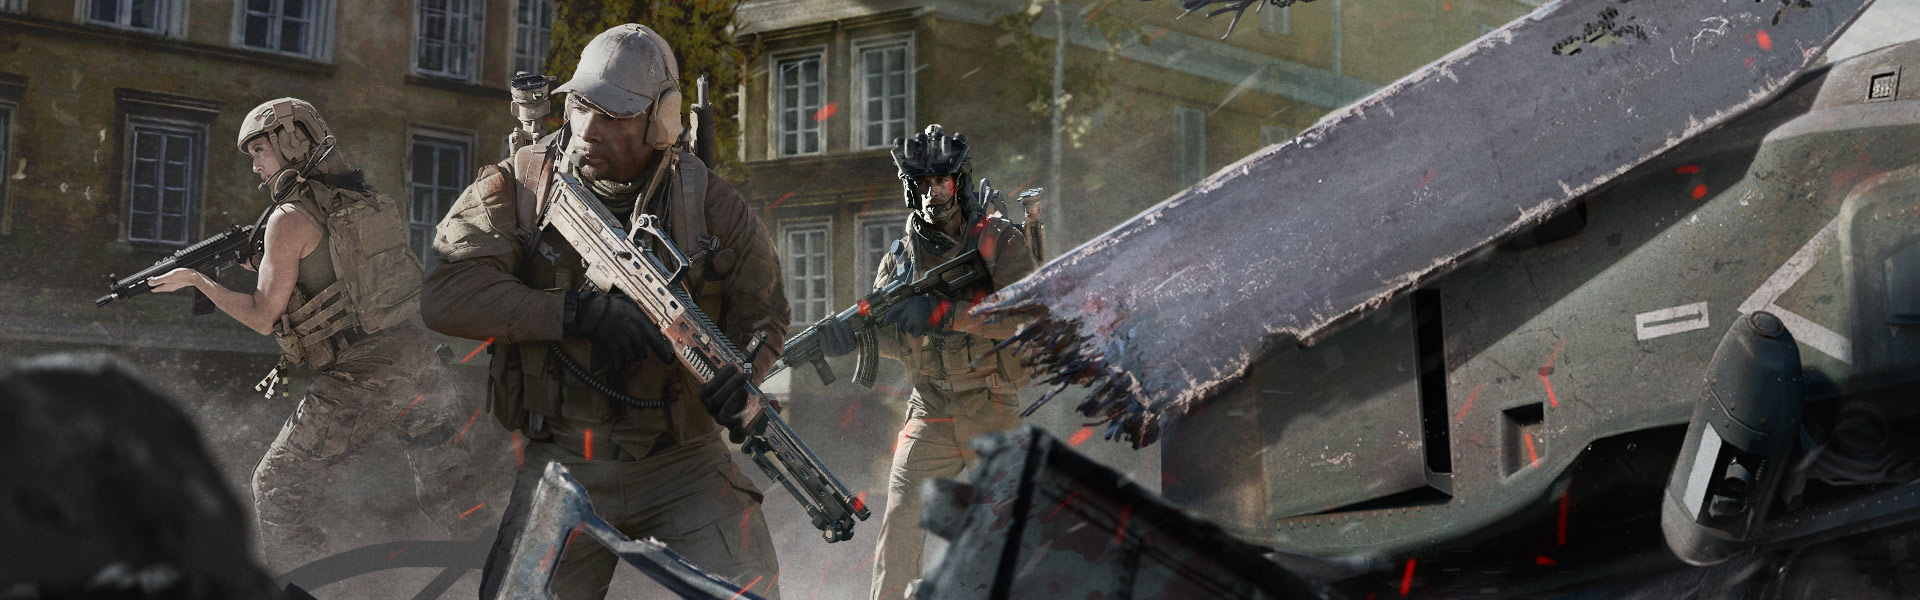 Juega a Call of Duty: Warzone gratis a partir del 10 de marzo